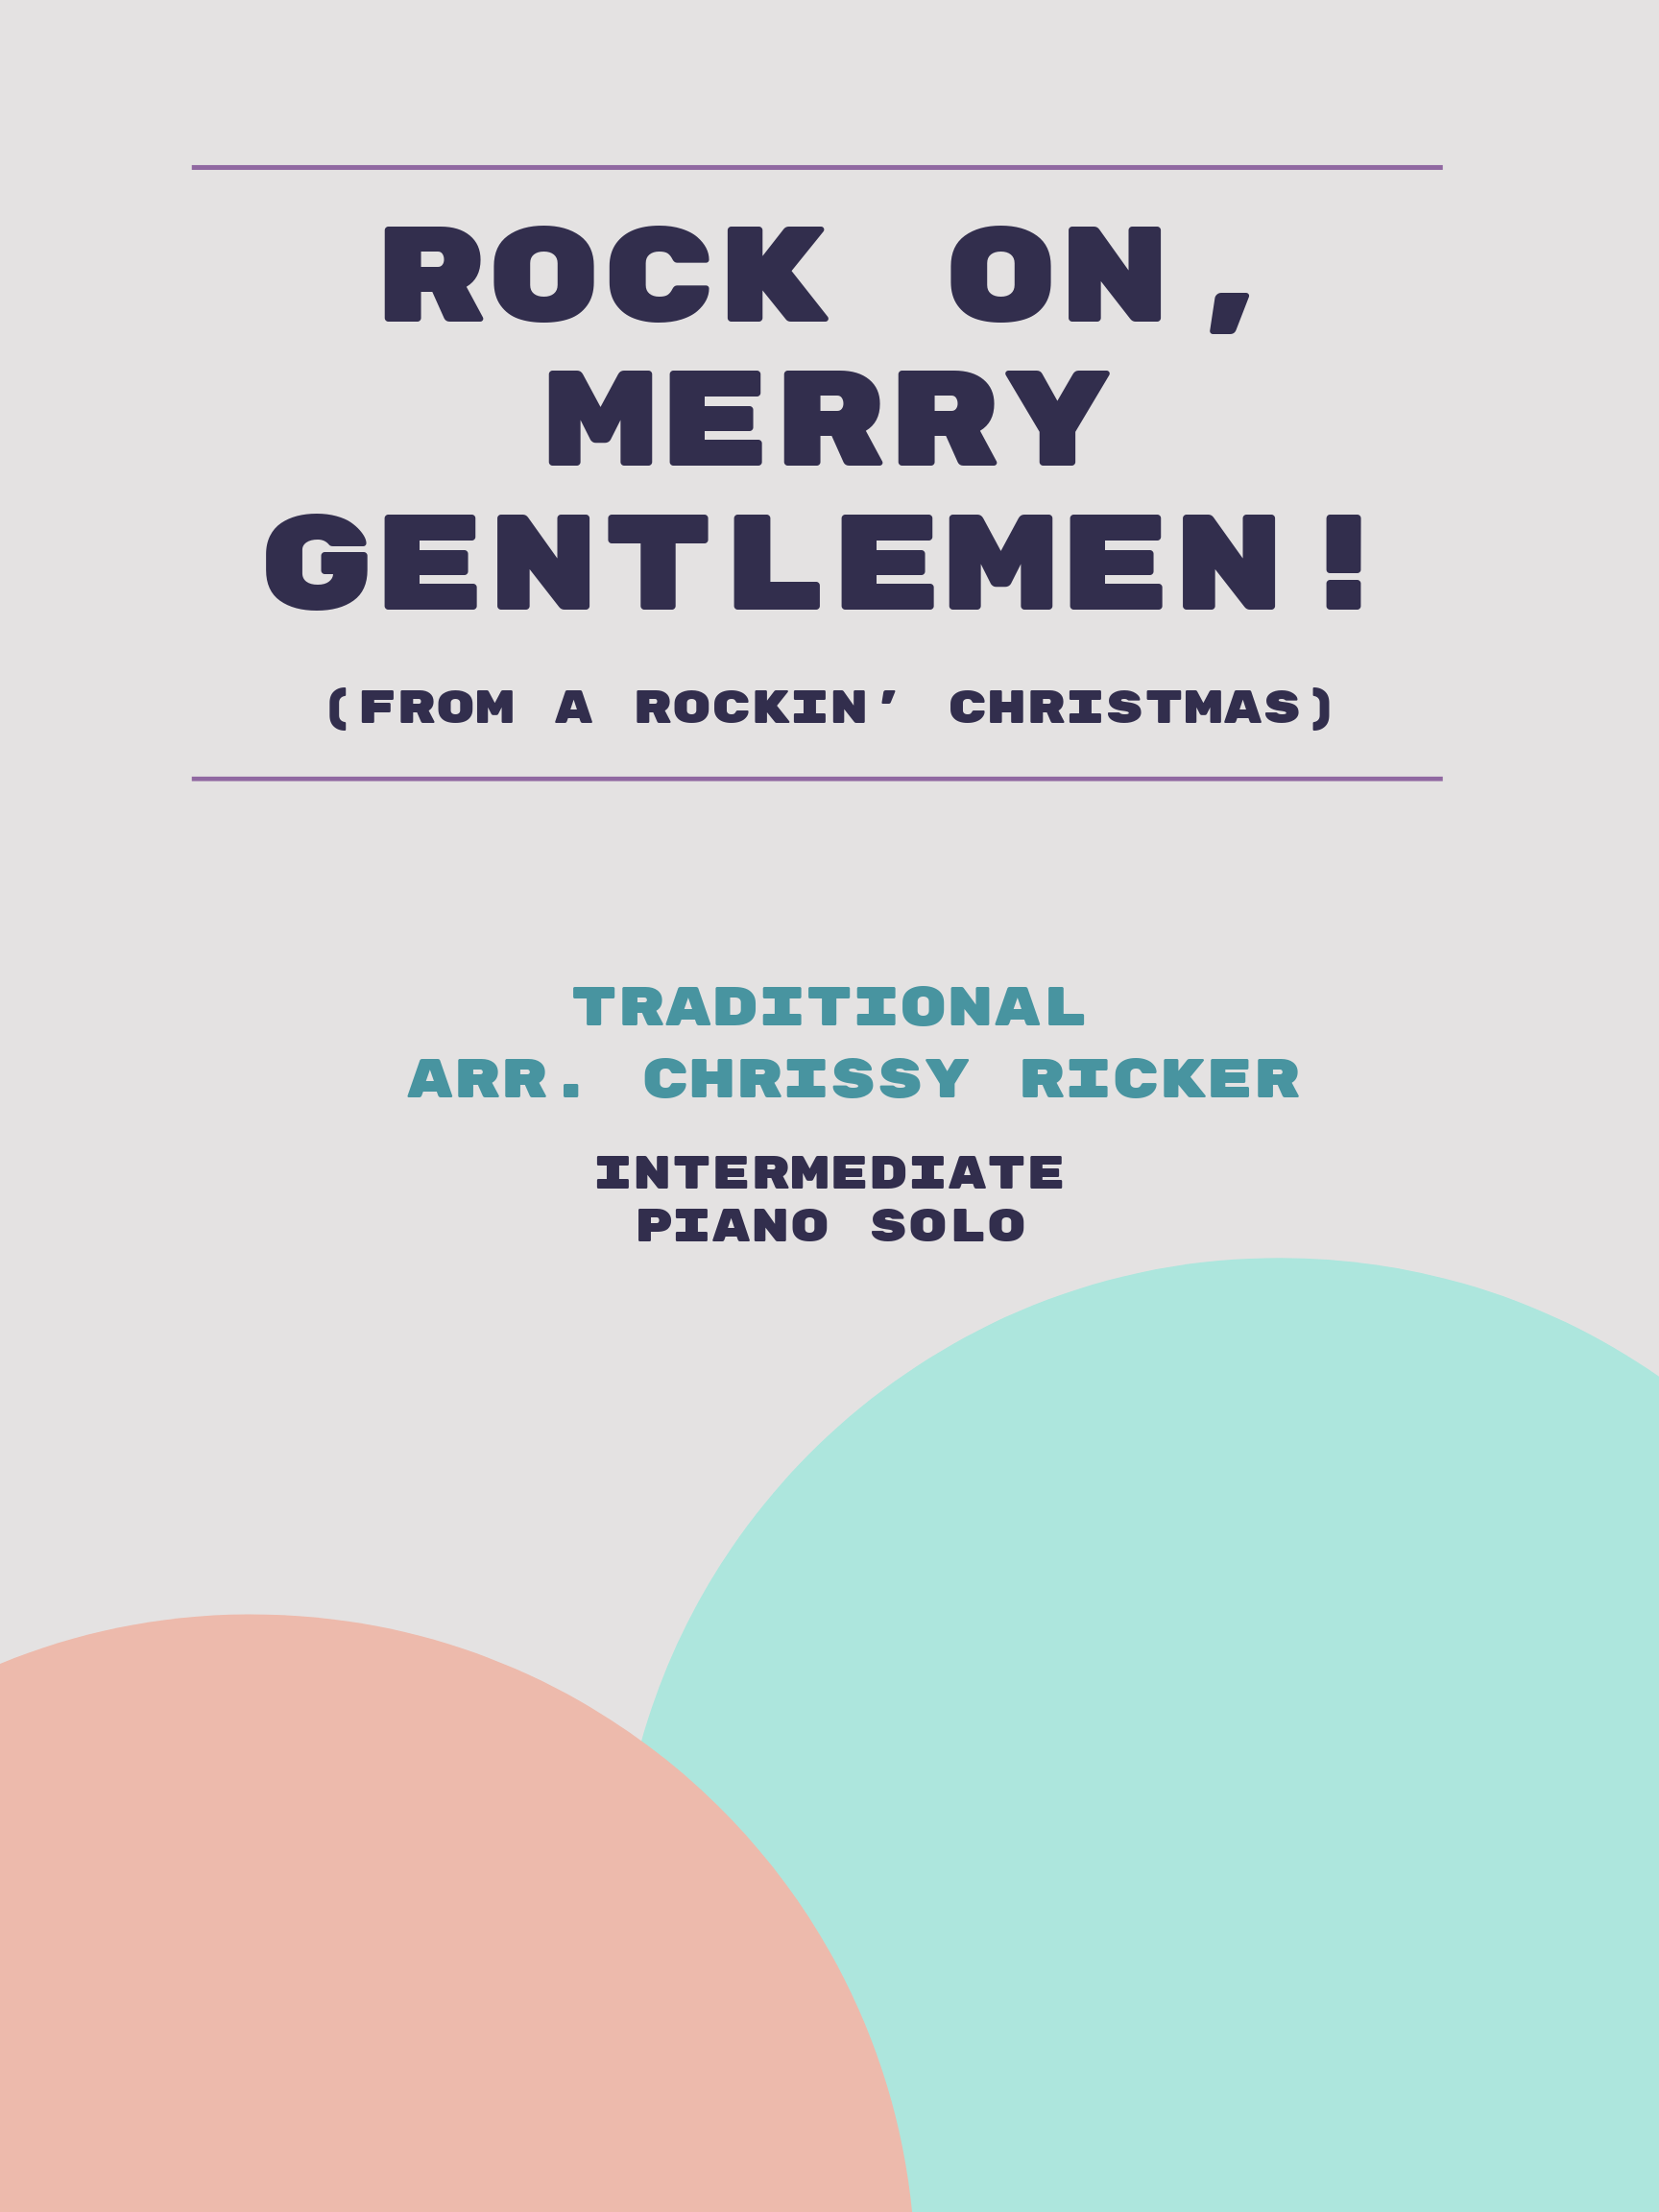 Rock On, Merry Gentlemen! by Traditional